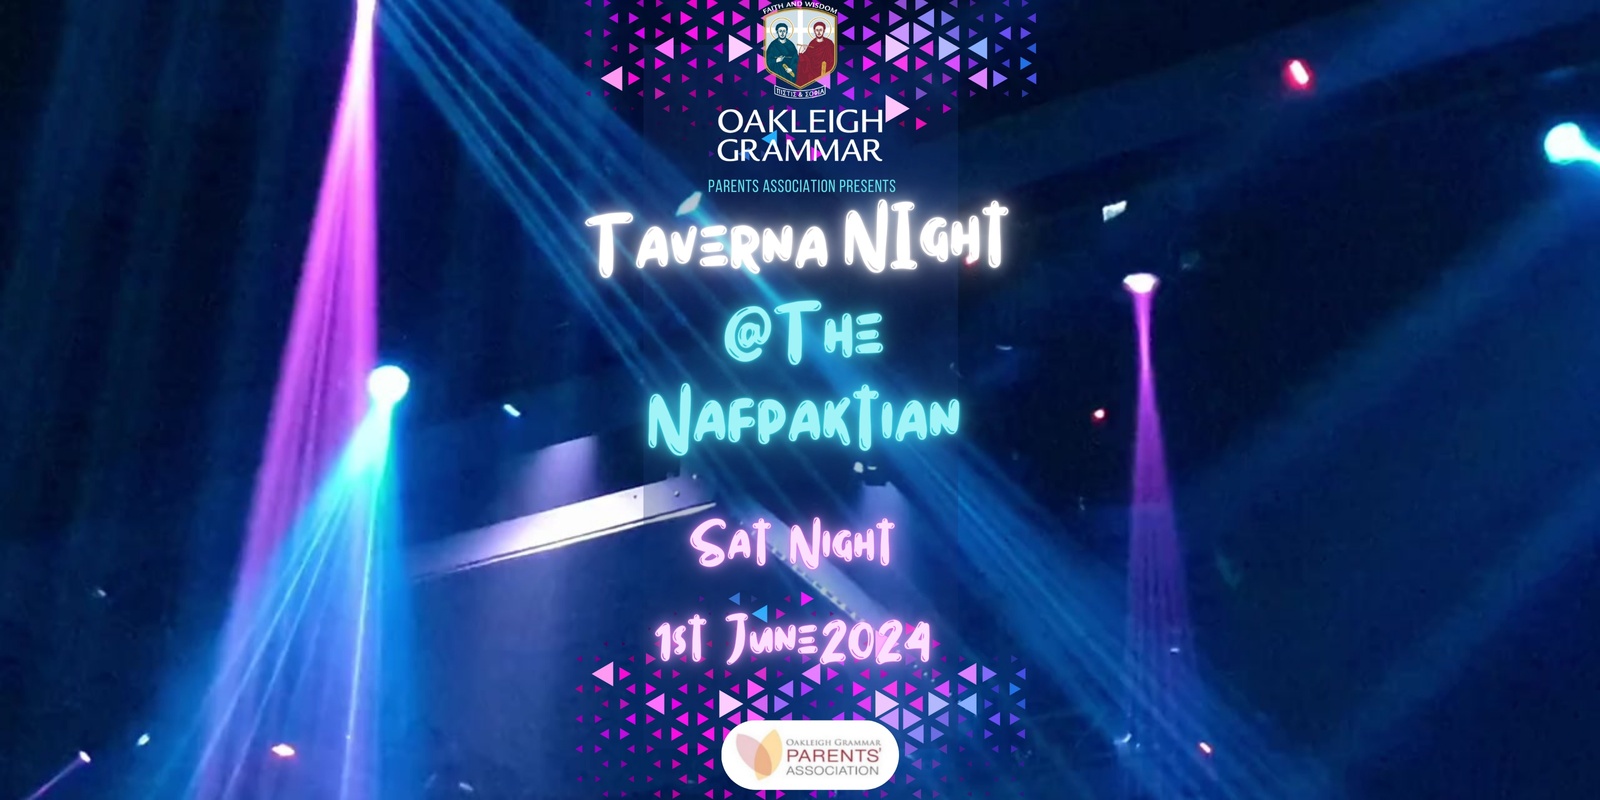 Banner image for (OG STAFF/COMMUNITY) Oakleigh Grammar - Parents Association "Taverna Night" June 1st 2024 @ The Nafpaktian